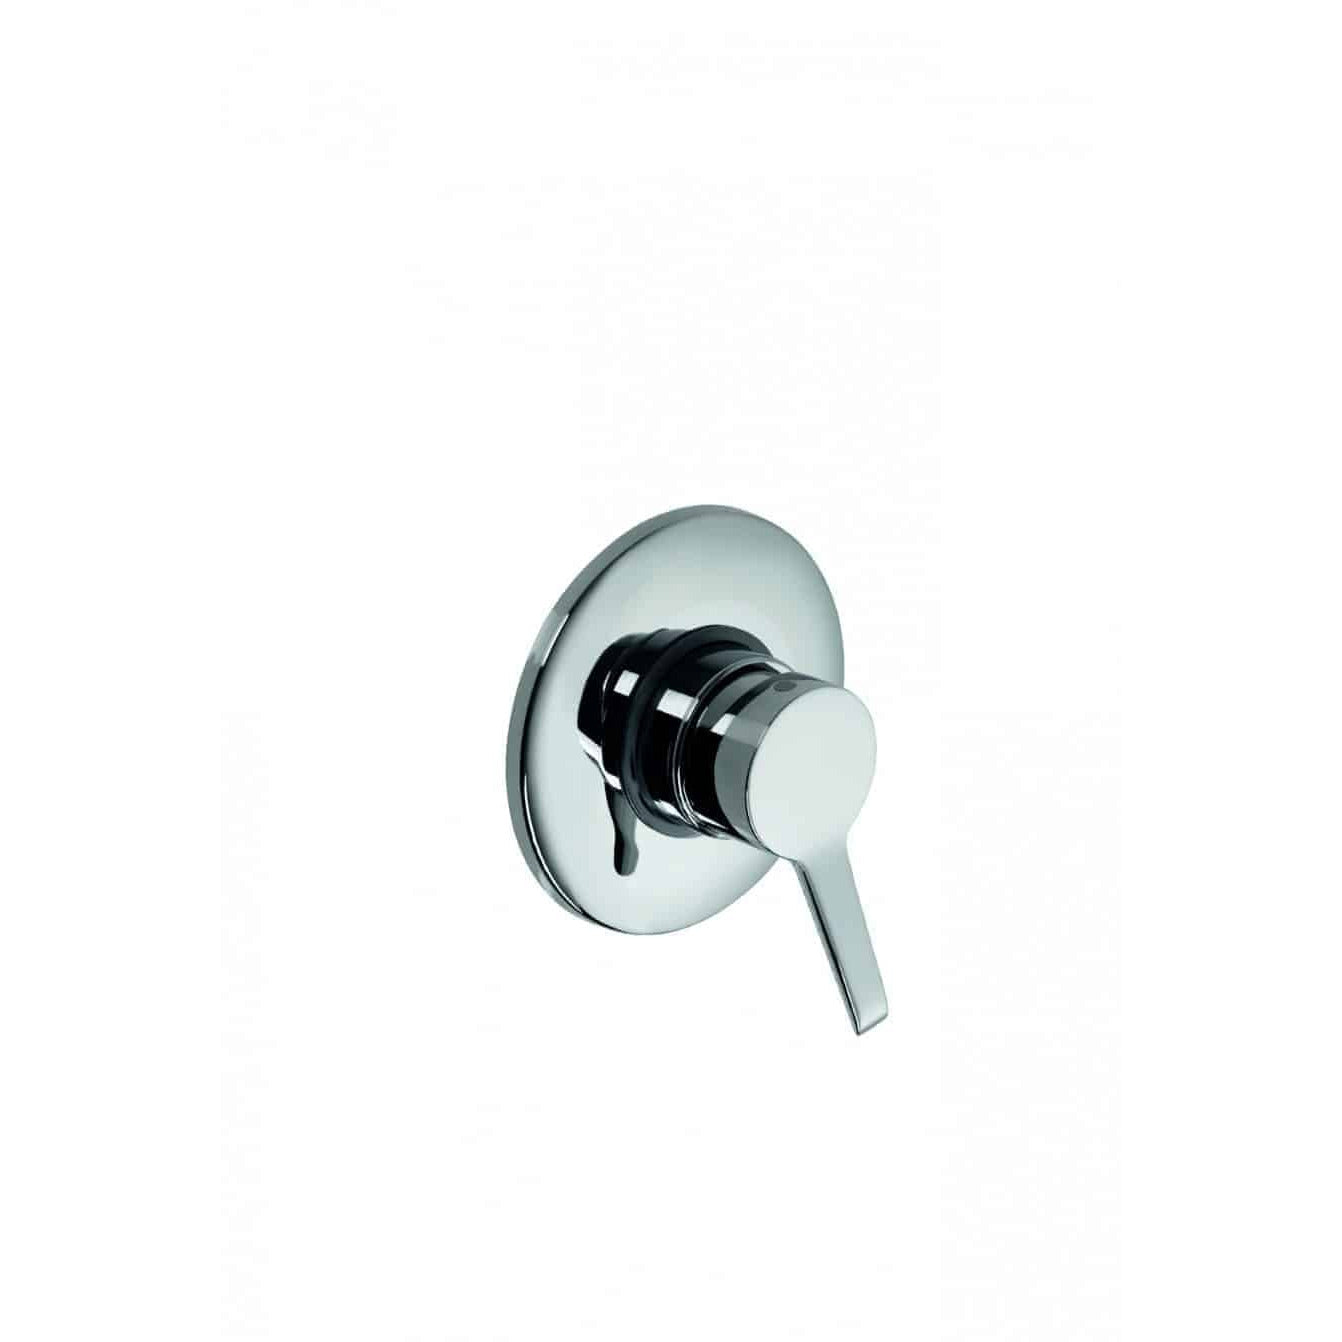 Shower valve pressure balanced Pin 1 function 482012-PB